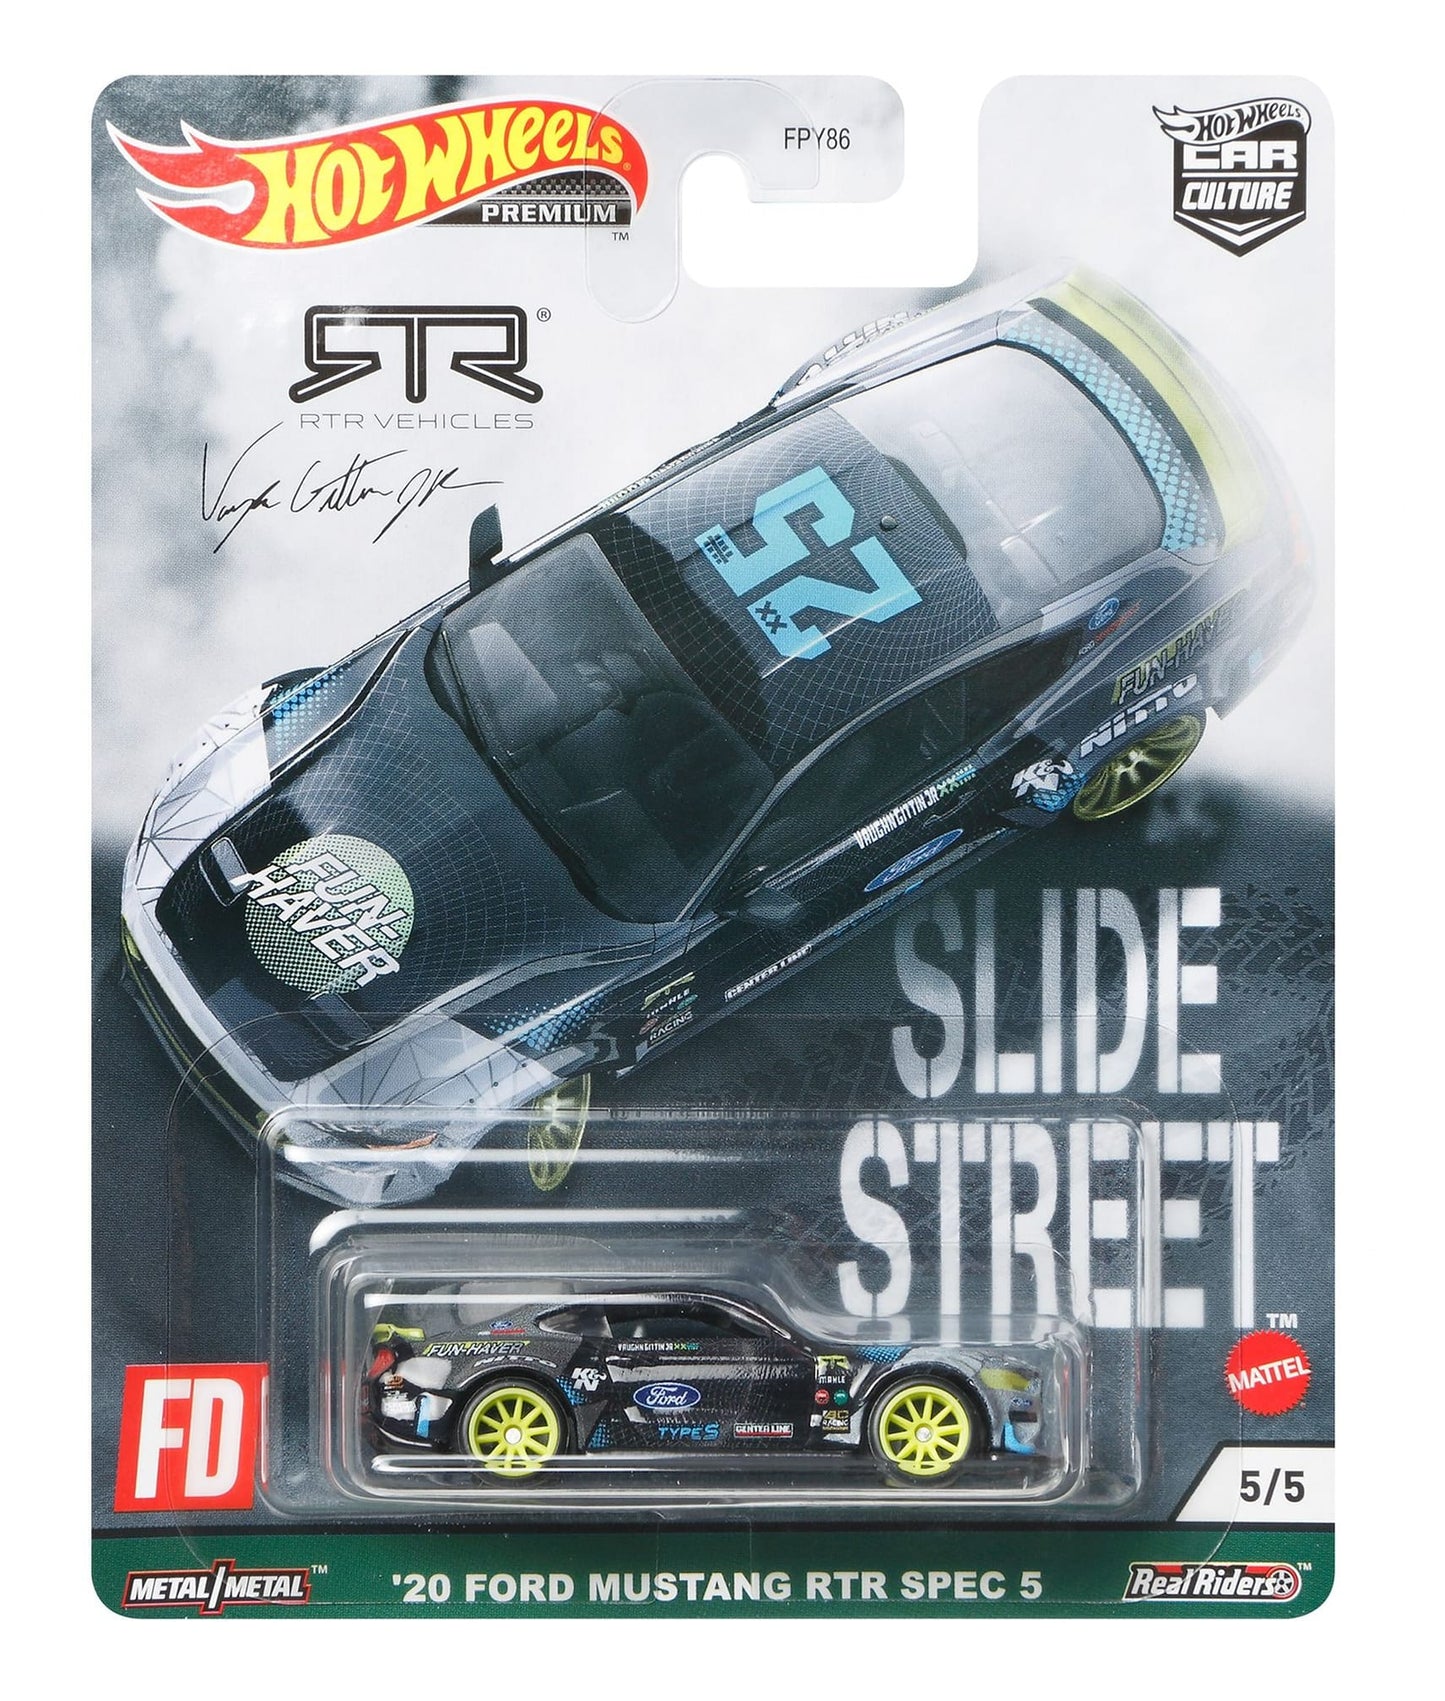 Hot Wheels Slide Street 20 Ford Mustang RTR Spec 5 1:64